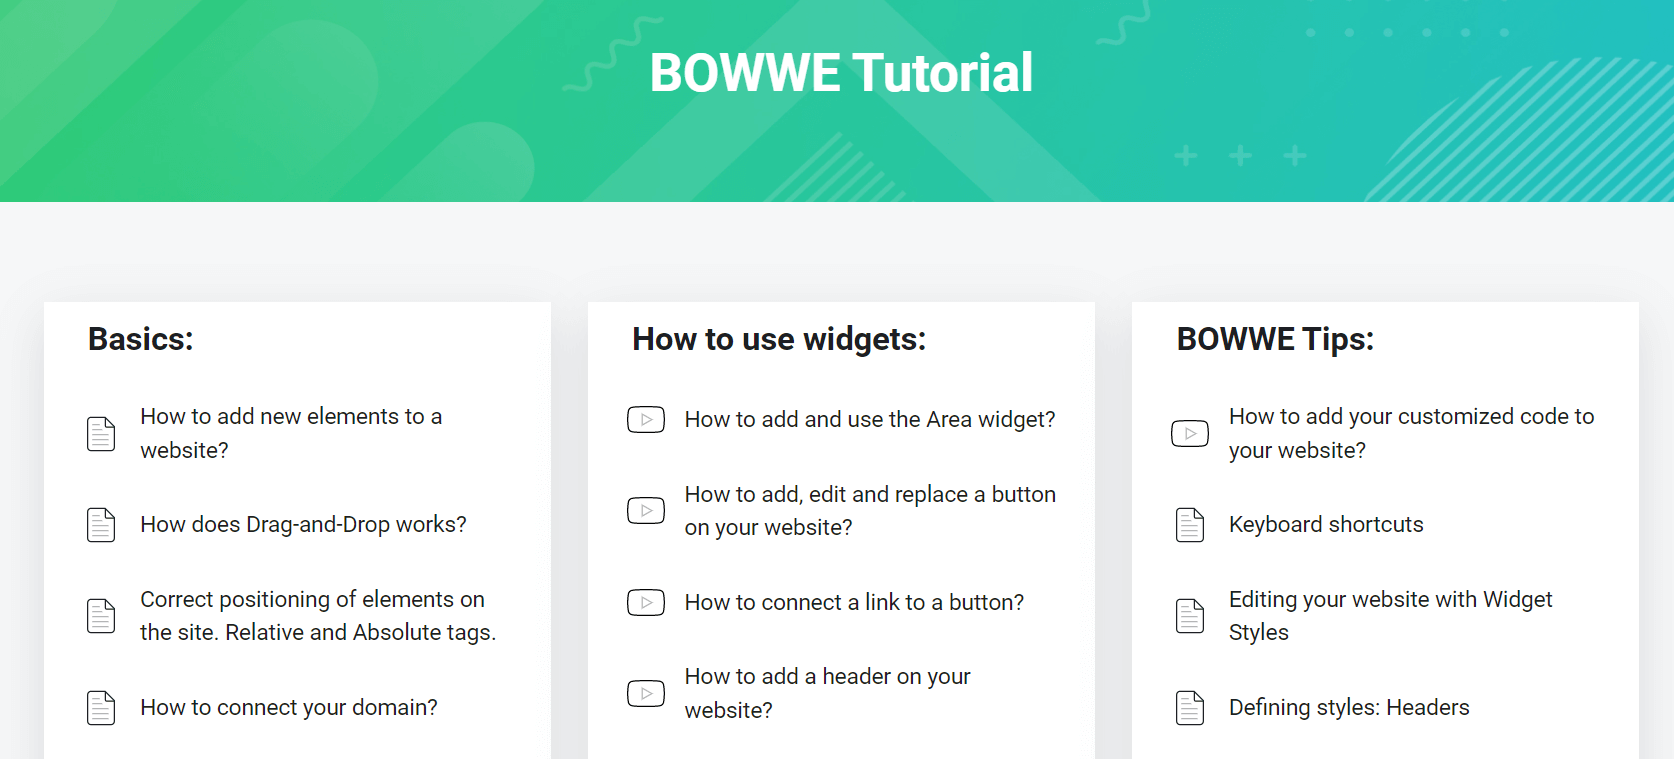 Tutorials on BOWWE website